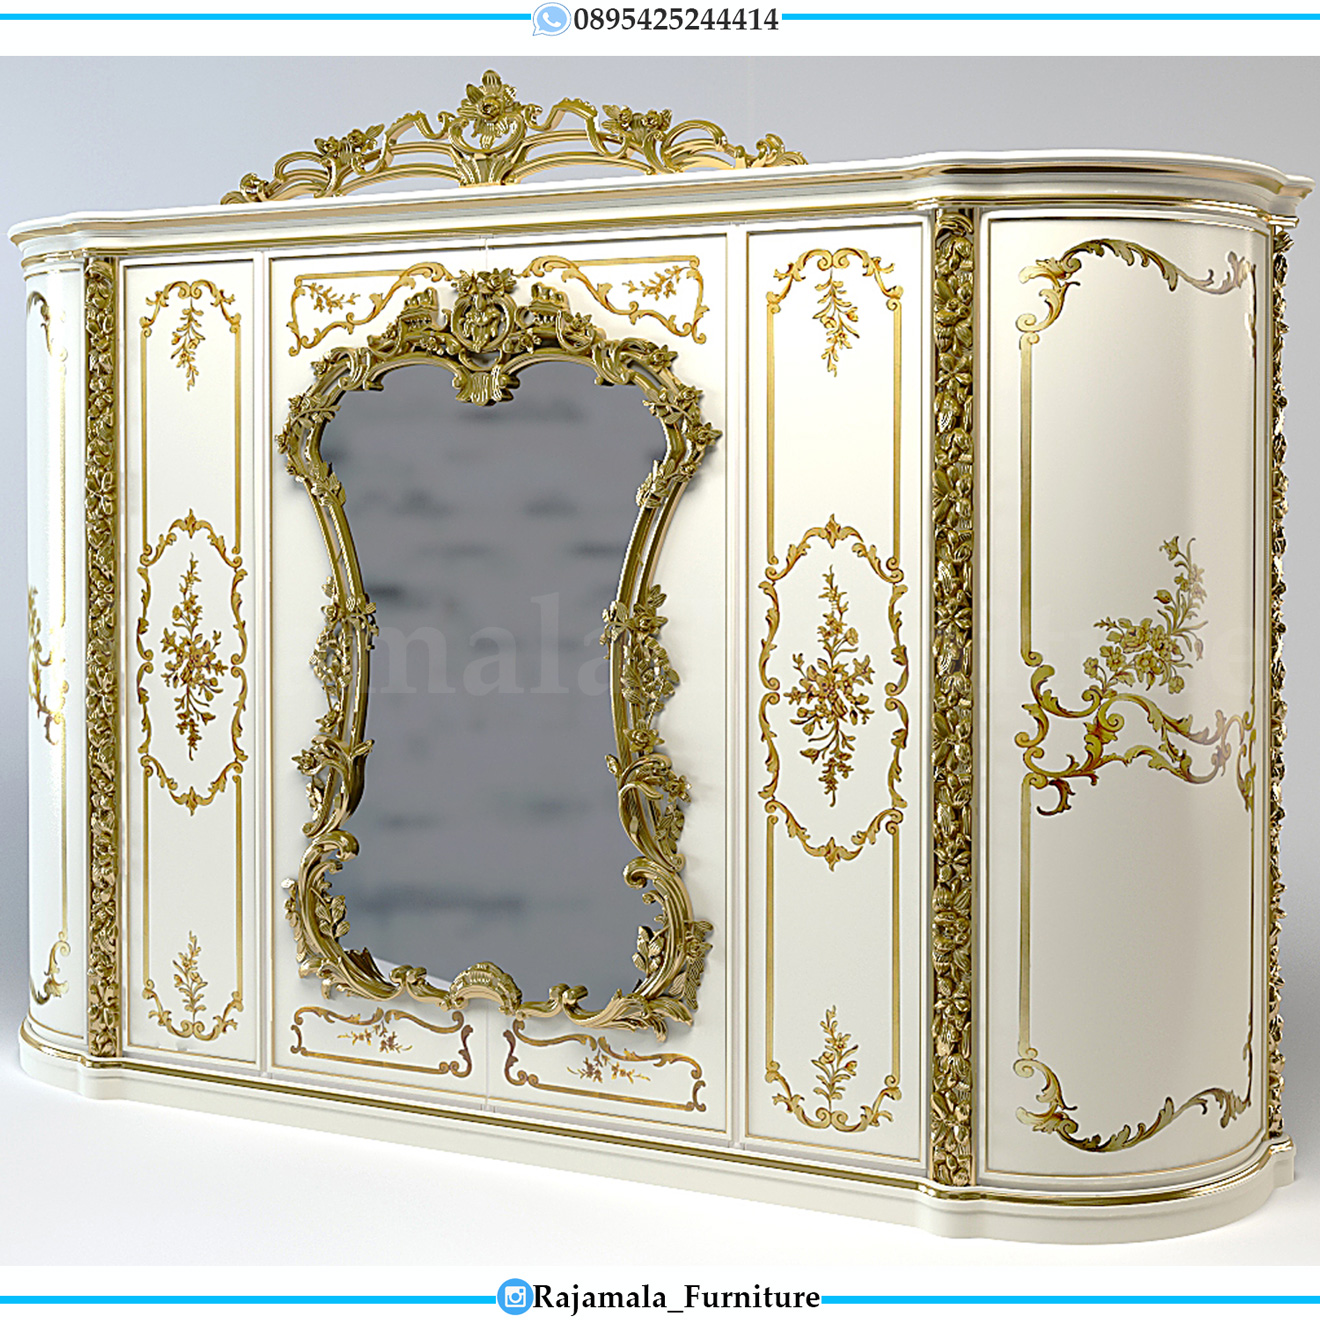 New Lemari Hias Jati Mewah Luxury Carving Classic Jepara RM-0036